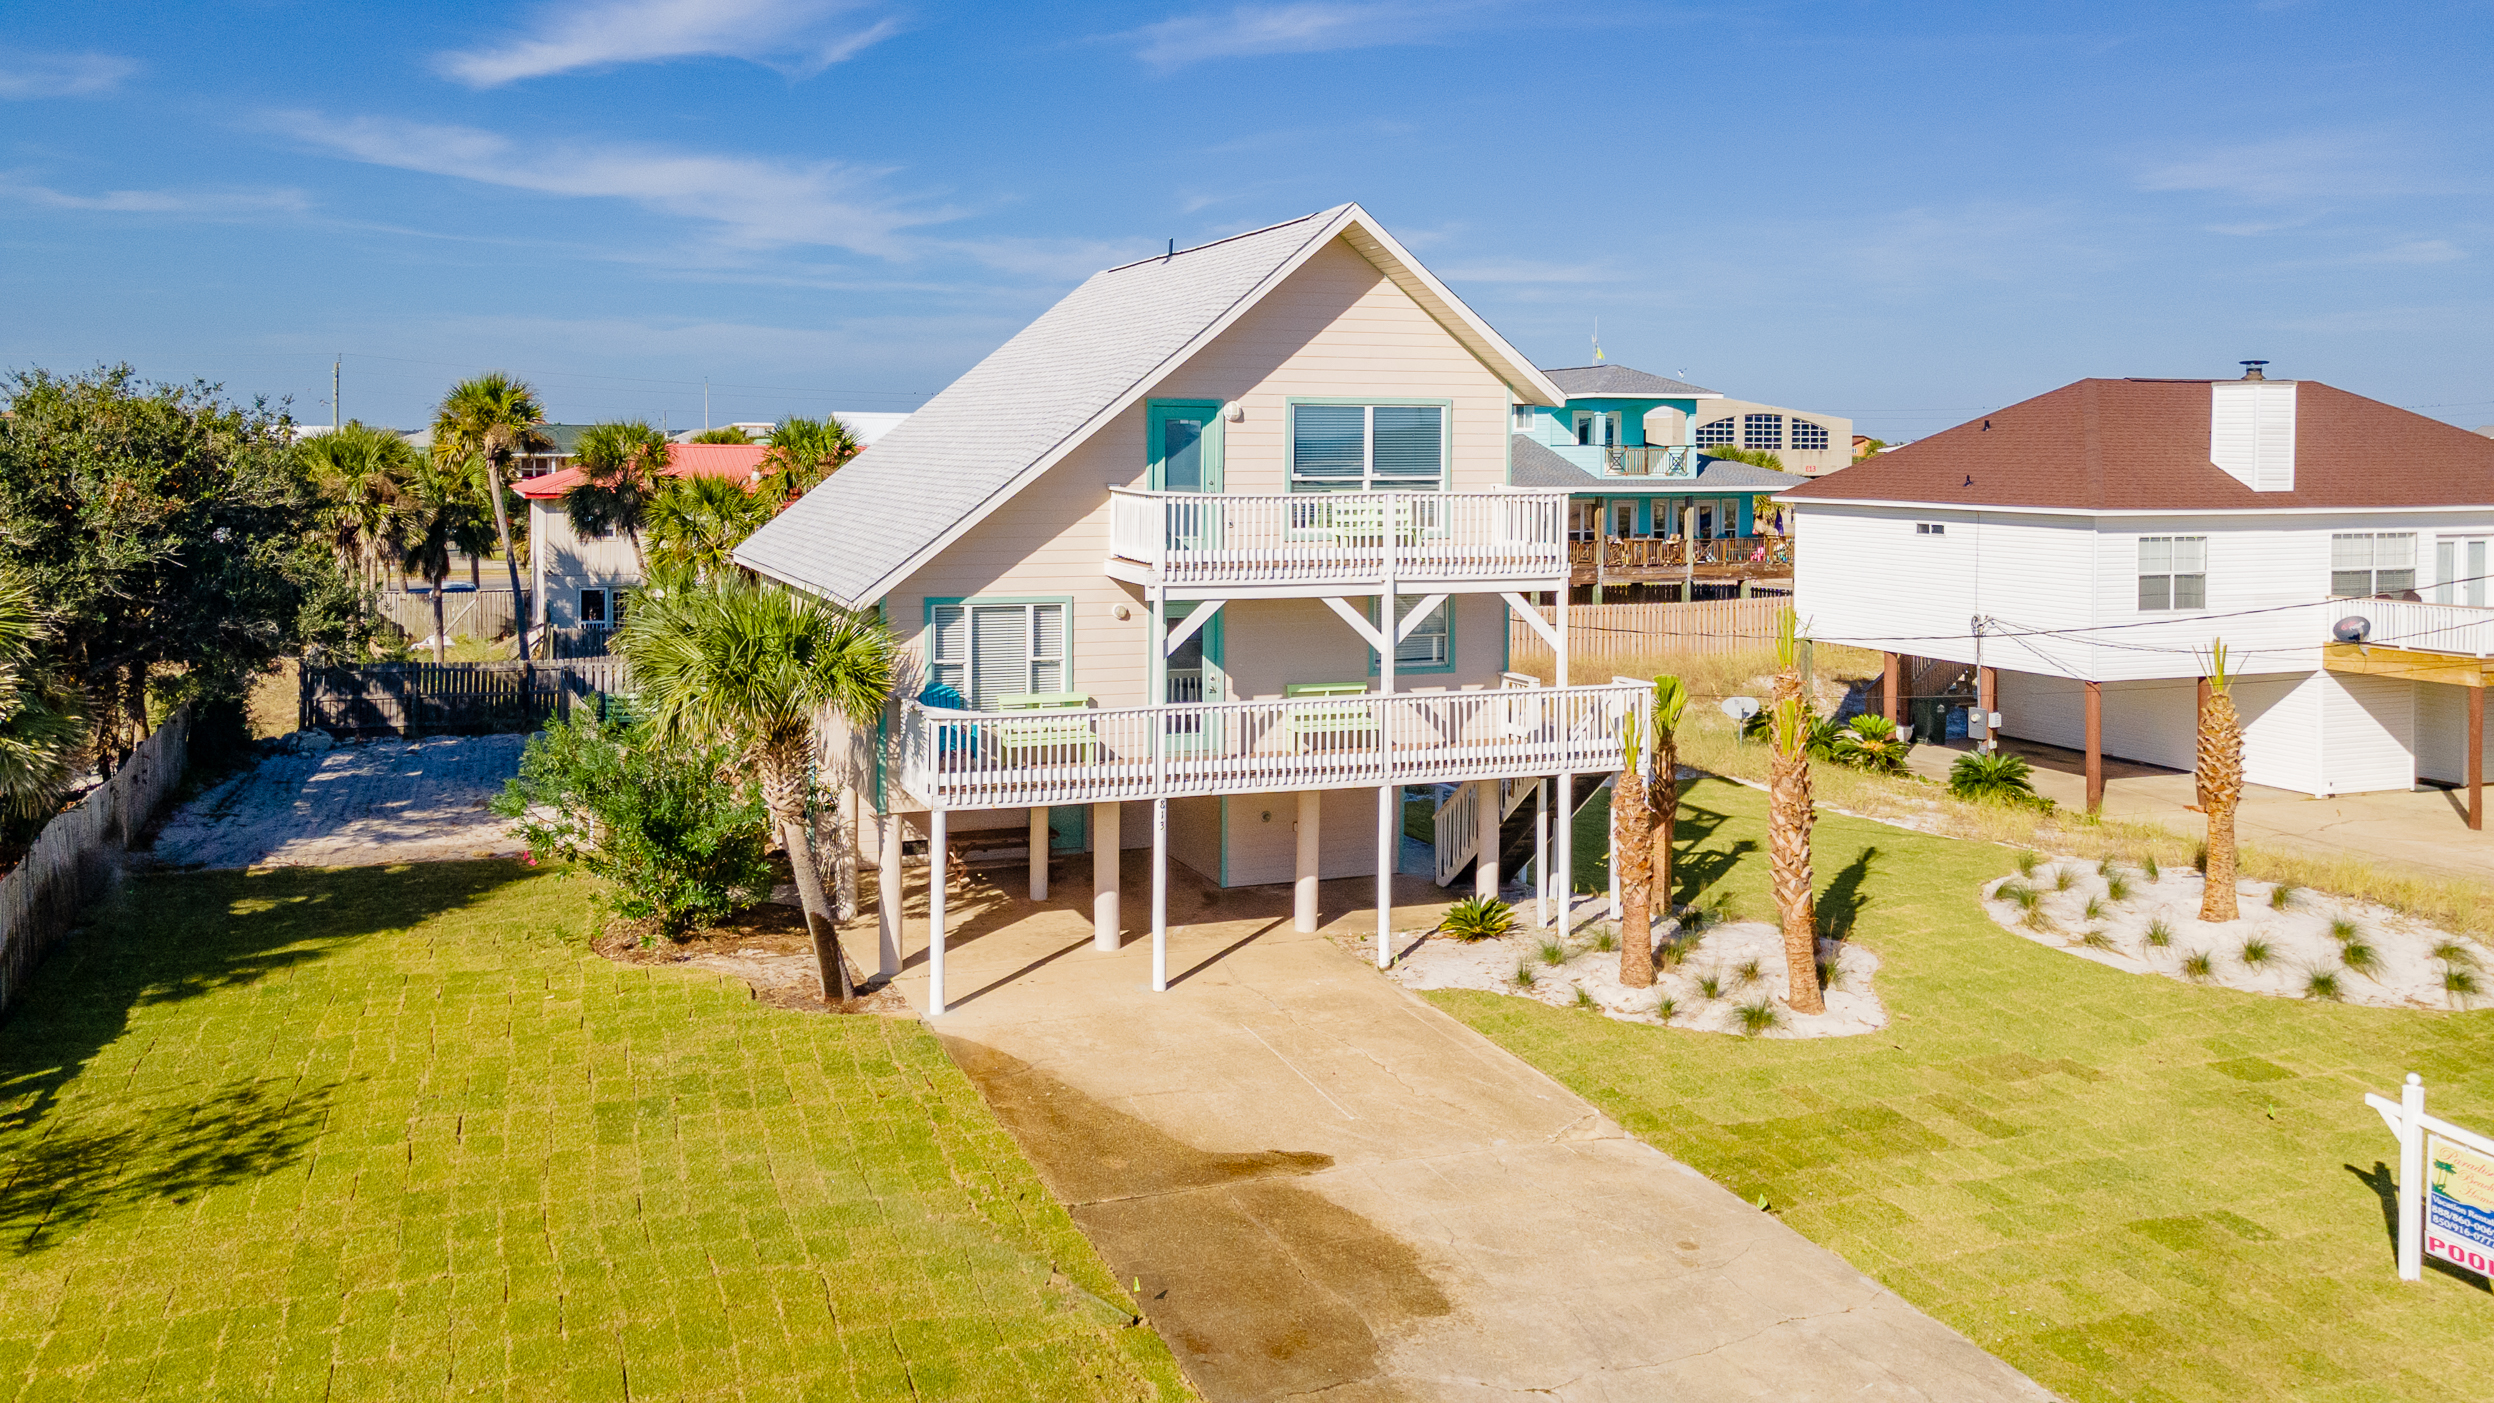 Maldonado 813 - The Lazee Lagoon Beach House House / Cottage rental in Pensacola Beach House Rentals in Pensacola Beach Florida - #4